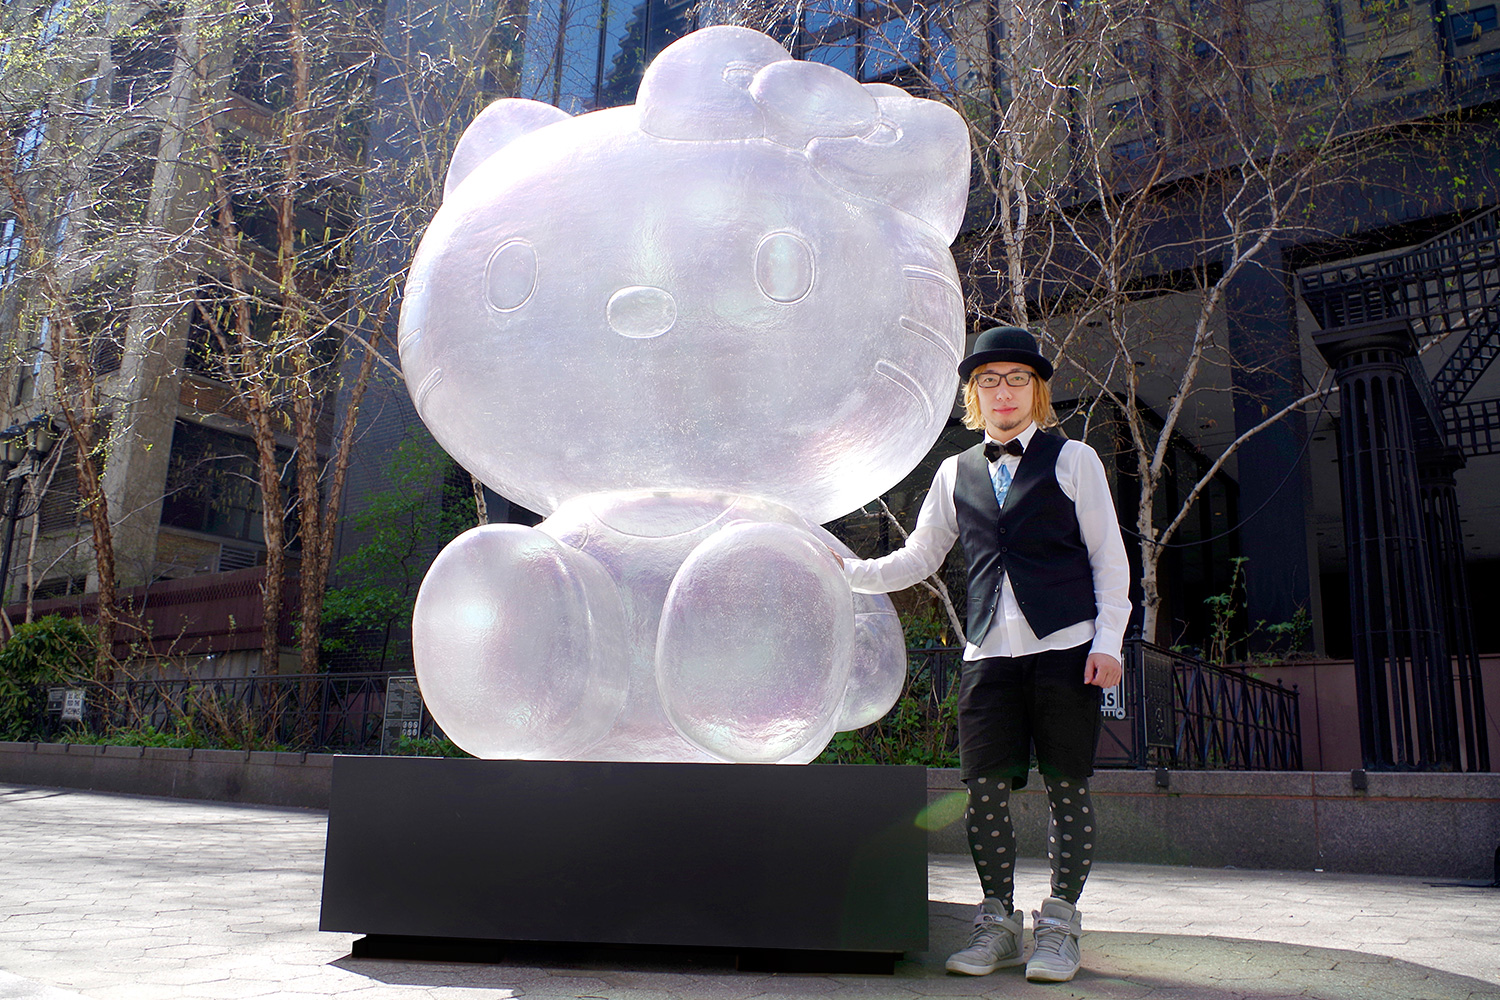 Sebastian Masuda’s Giant Hello Kitty Sculpture Lands in New York City